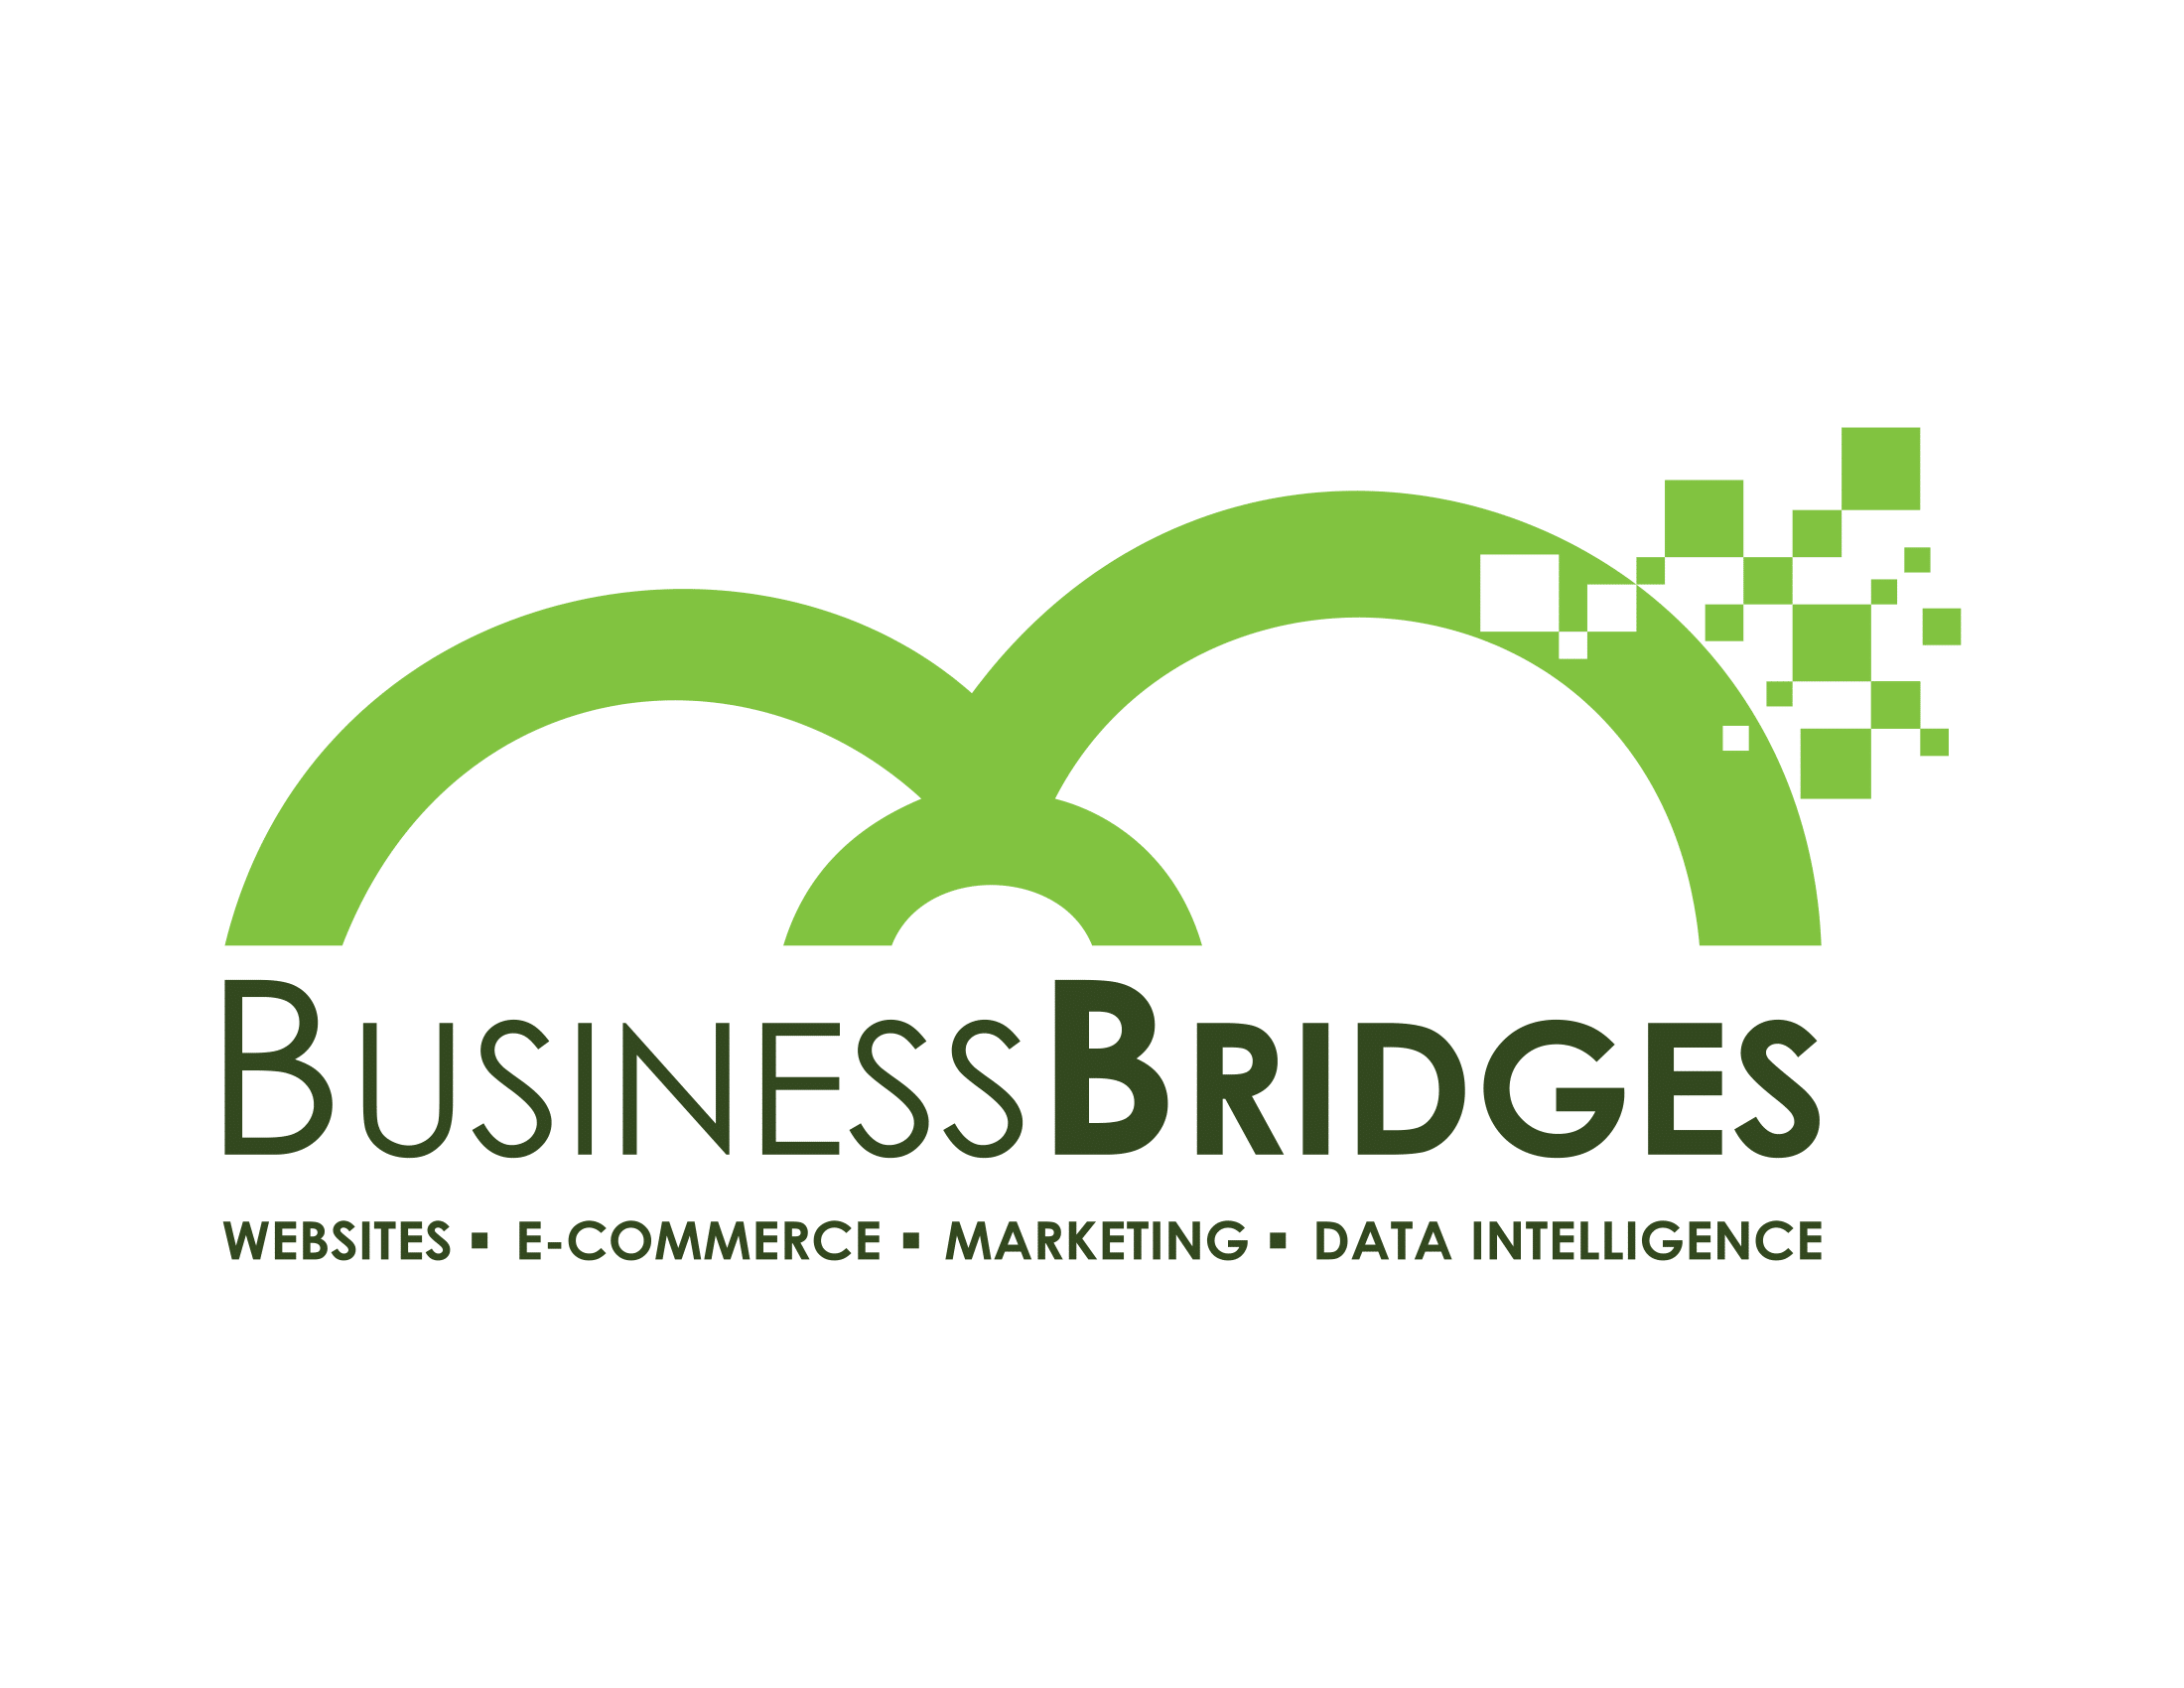 Business Bridges Company Limited